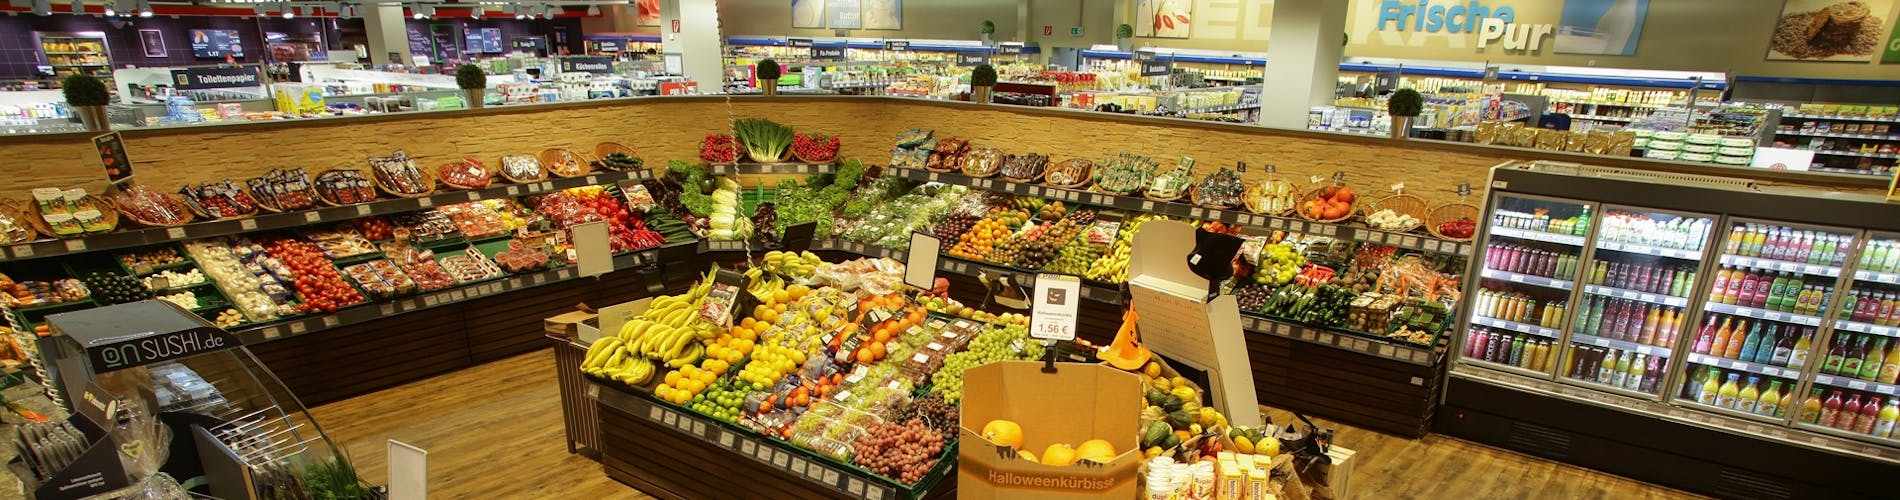 fruits & vegetables employee app retail supermarket